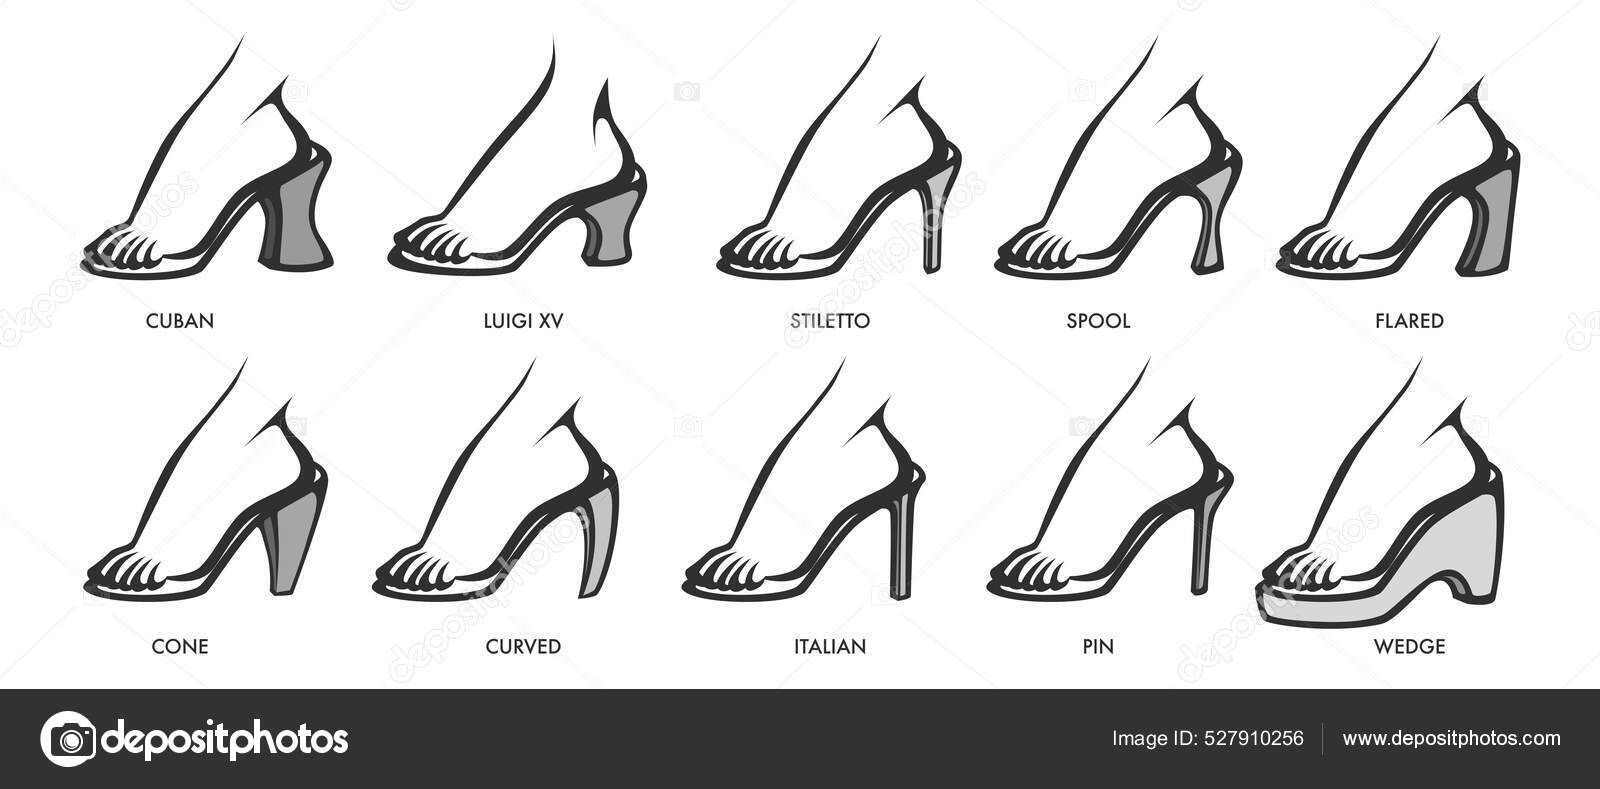 Women Silver Embellished Sandal – ShoeTree